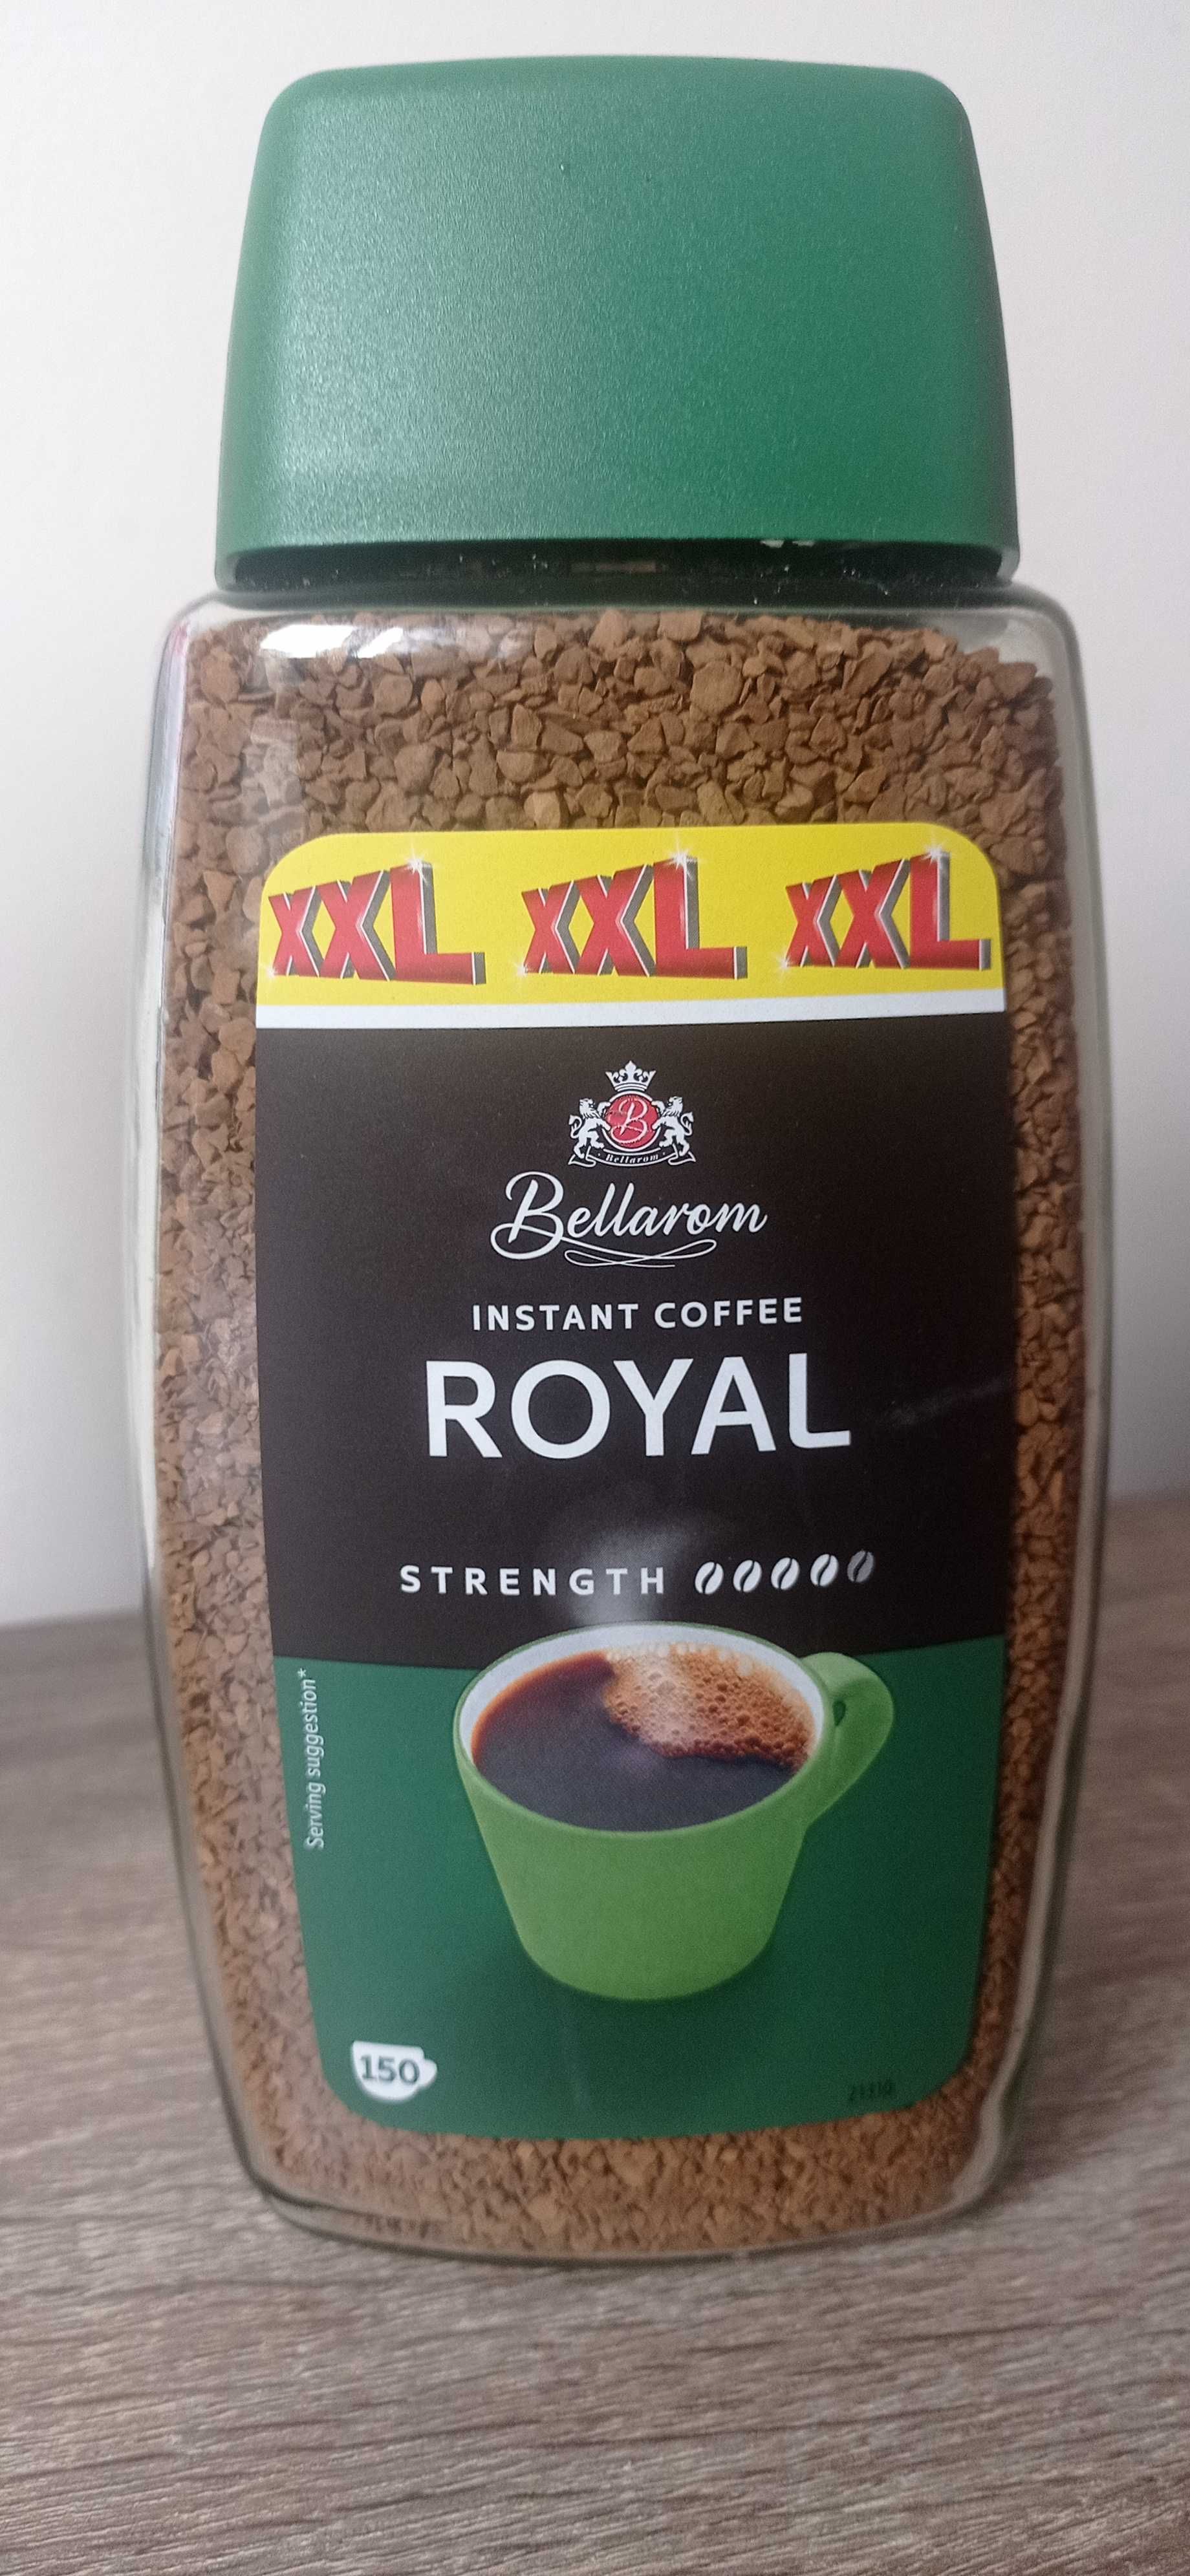 Bellarom instant coffee Royal